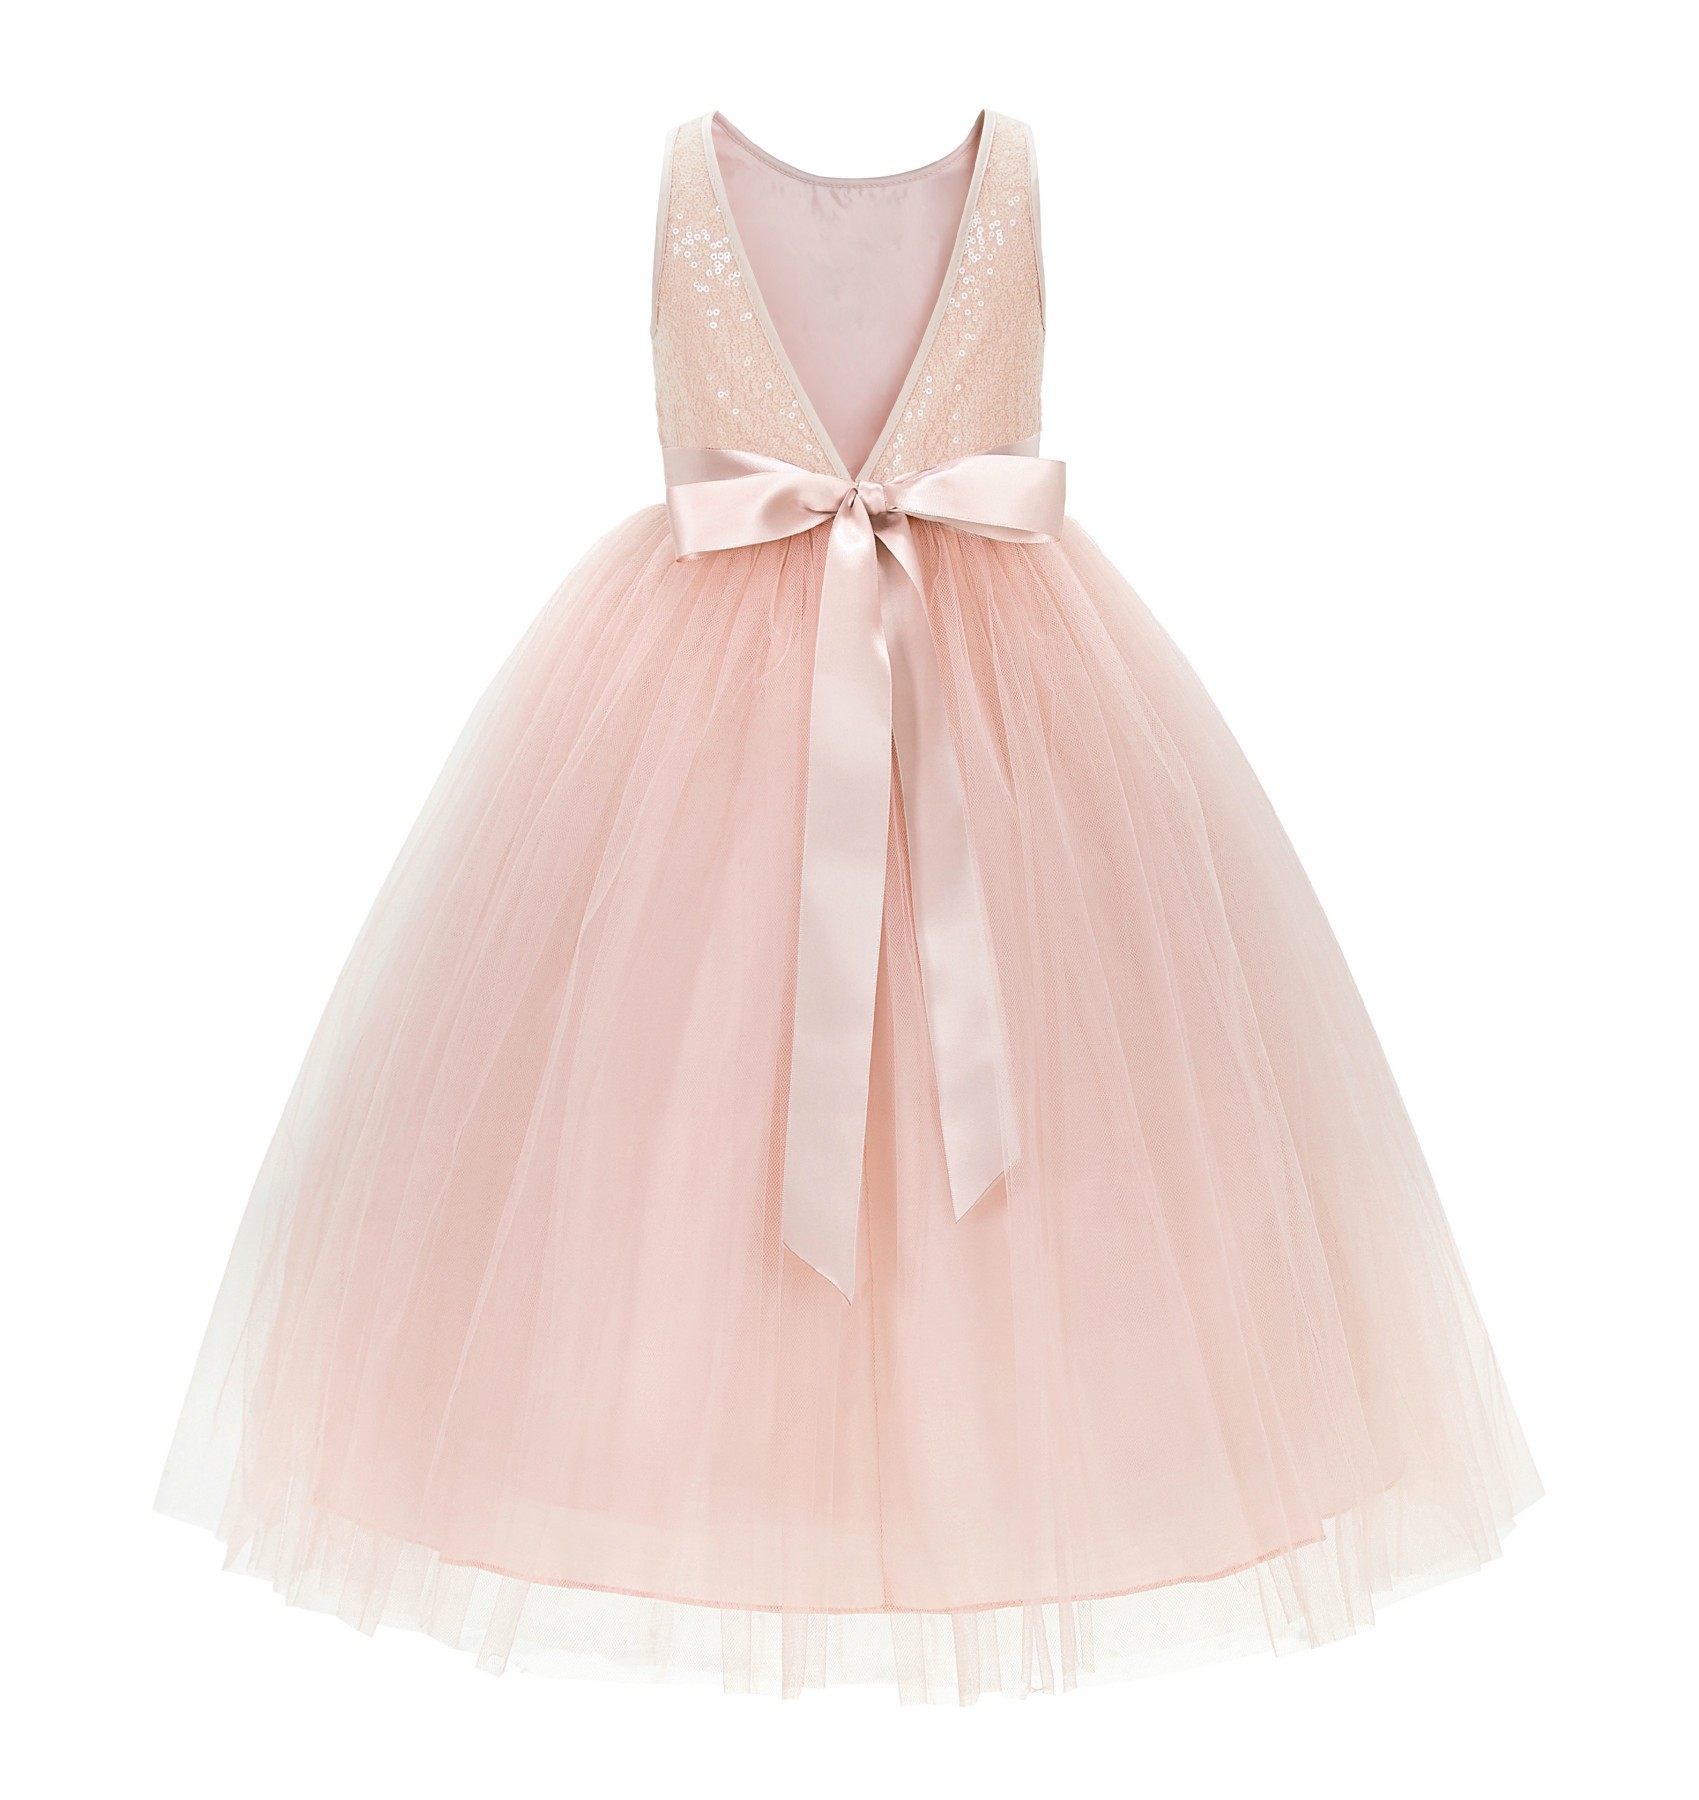 Blush Pink Sequin V-Back Flower Girl Dress LG1